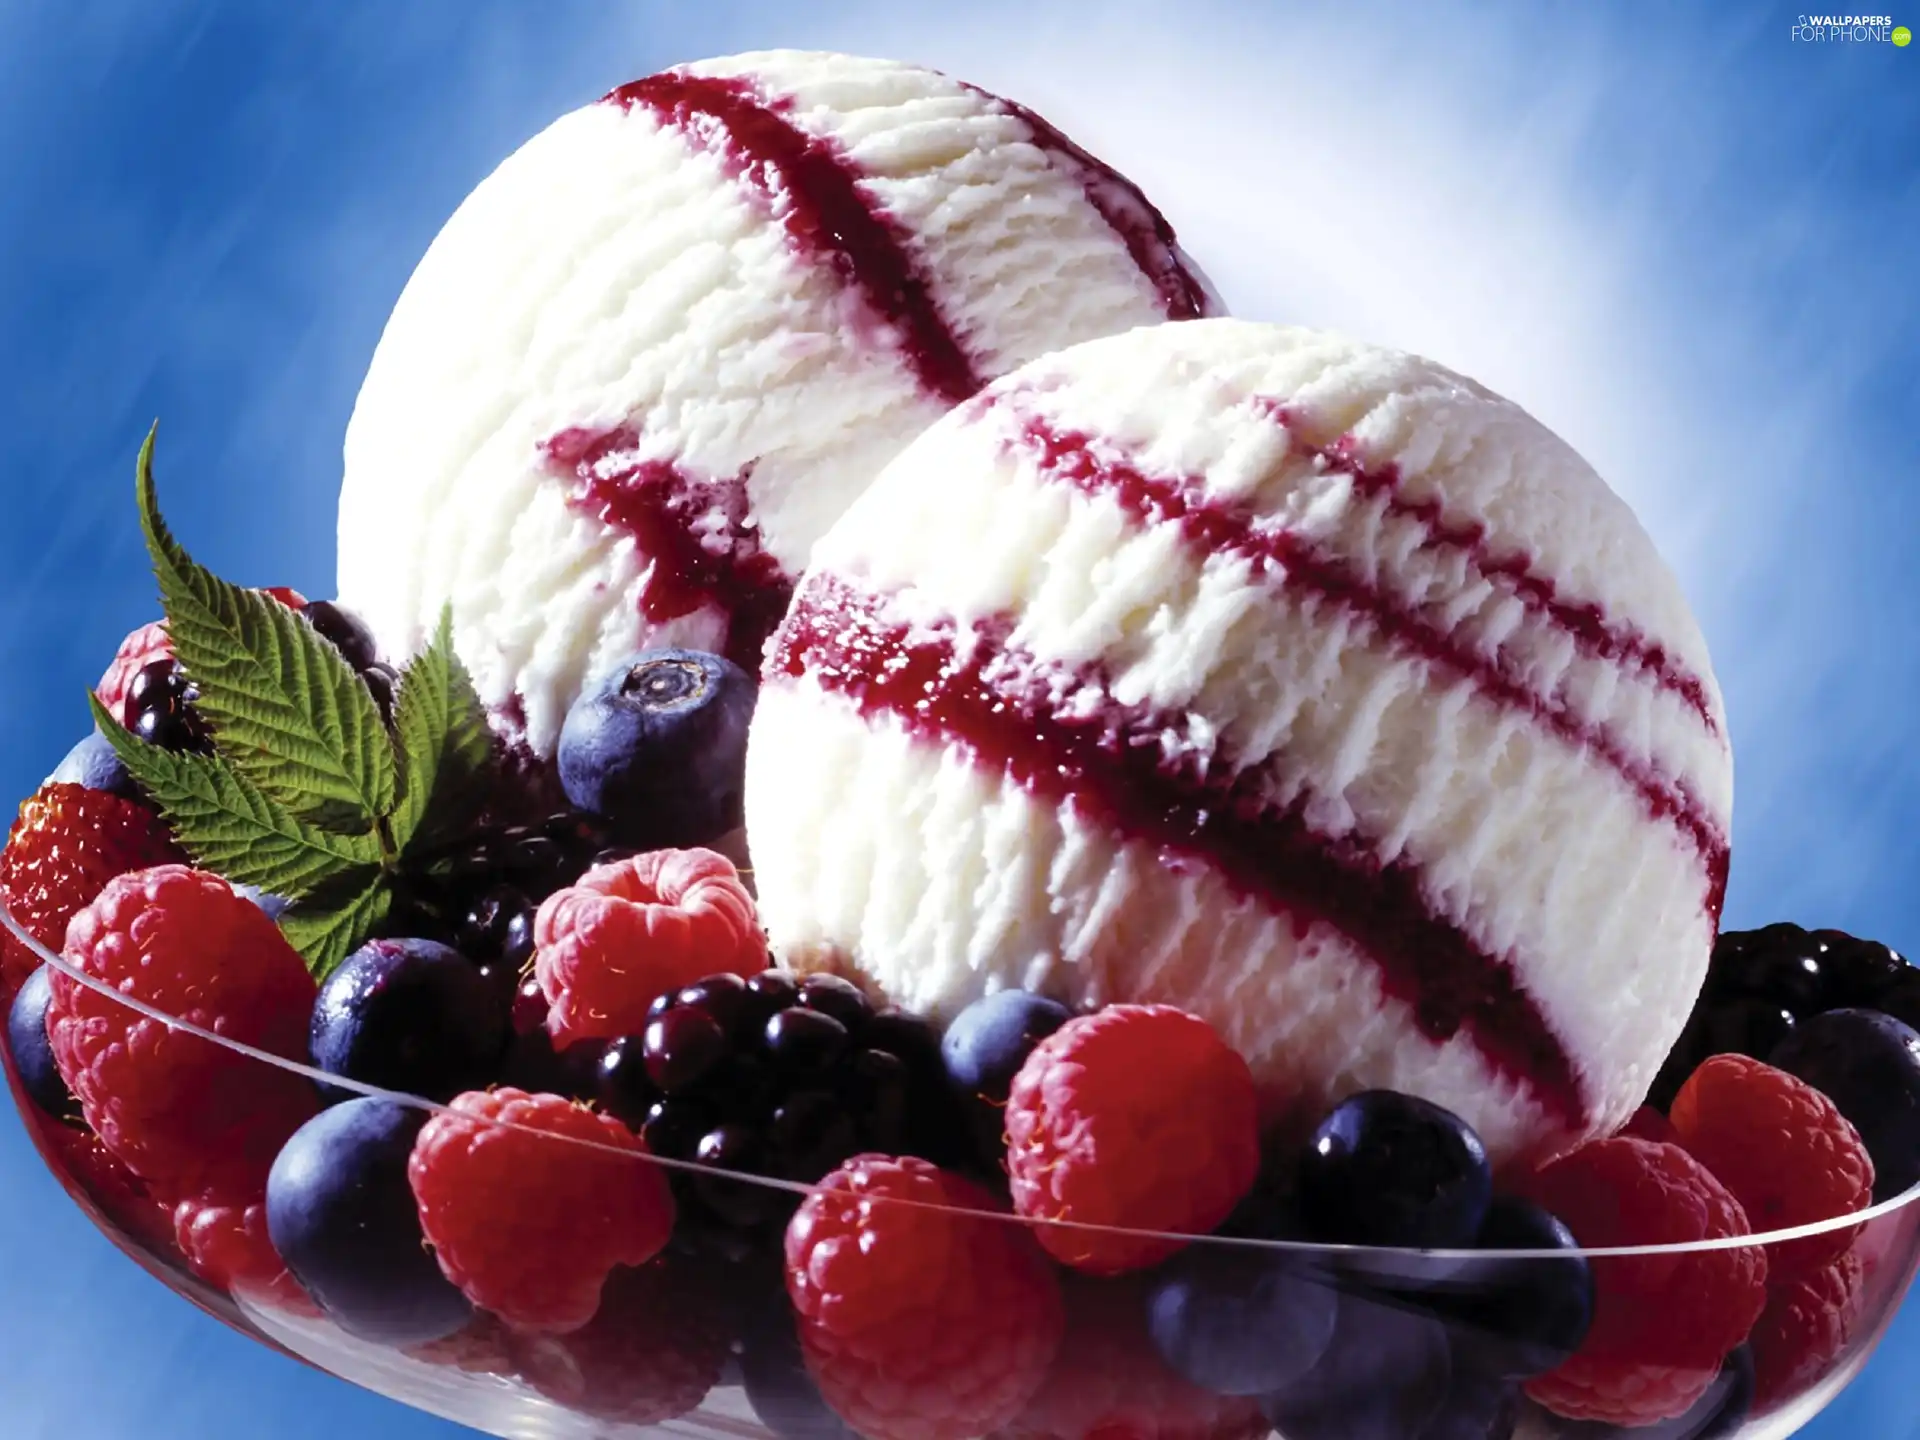 Ice Cream, Two, blackberries, blueberries, raspberries, M&Ms balls